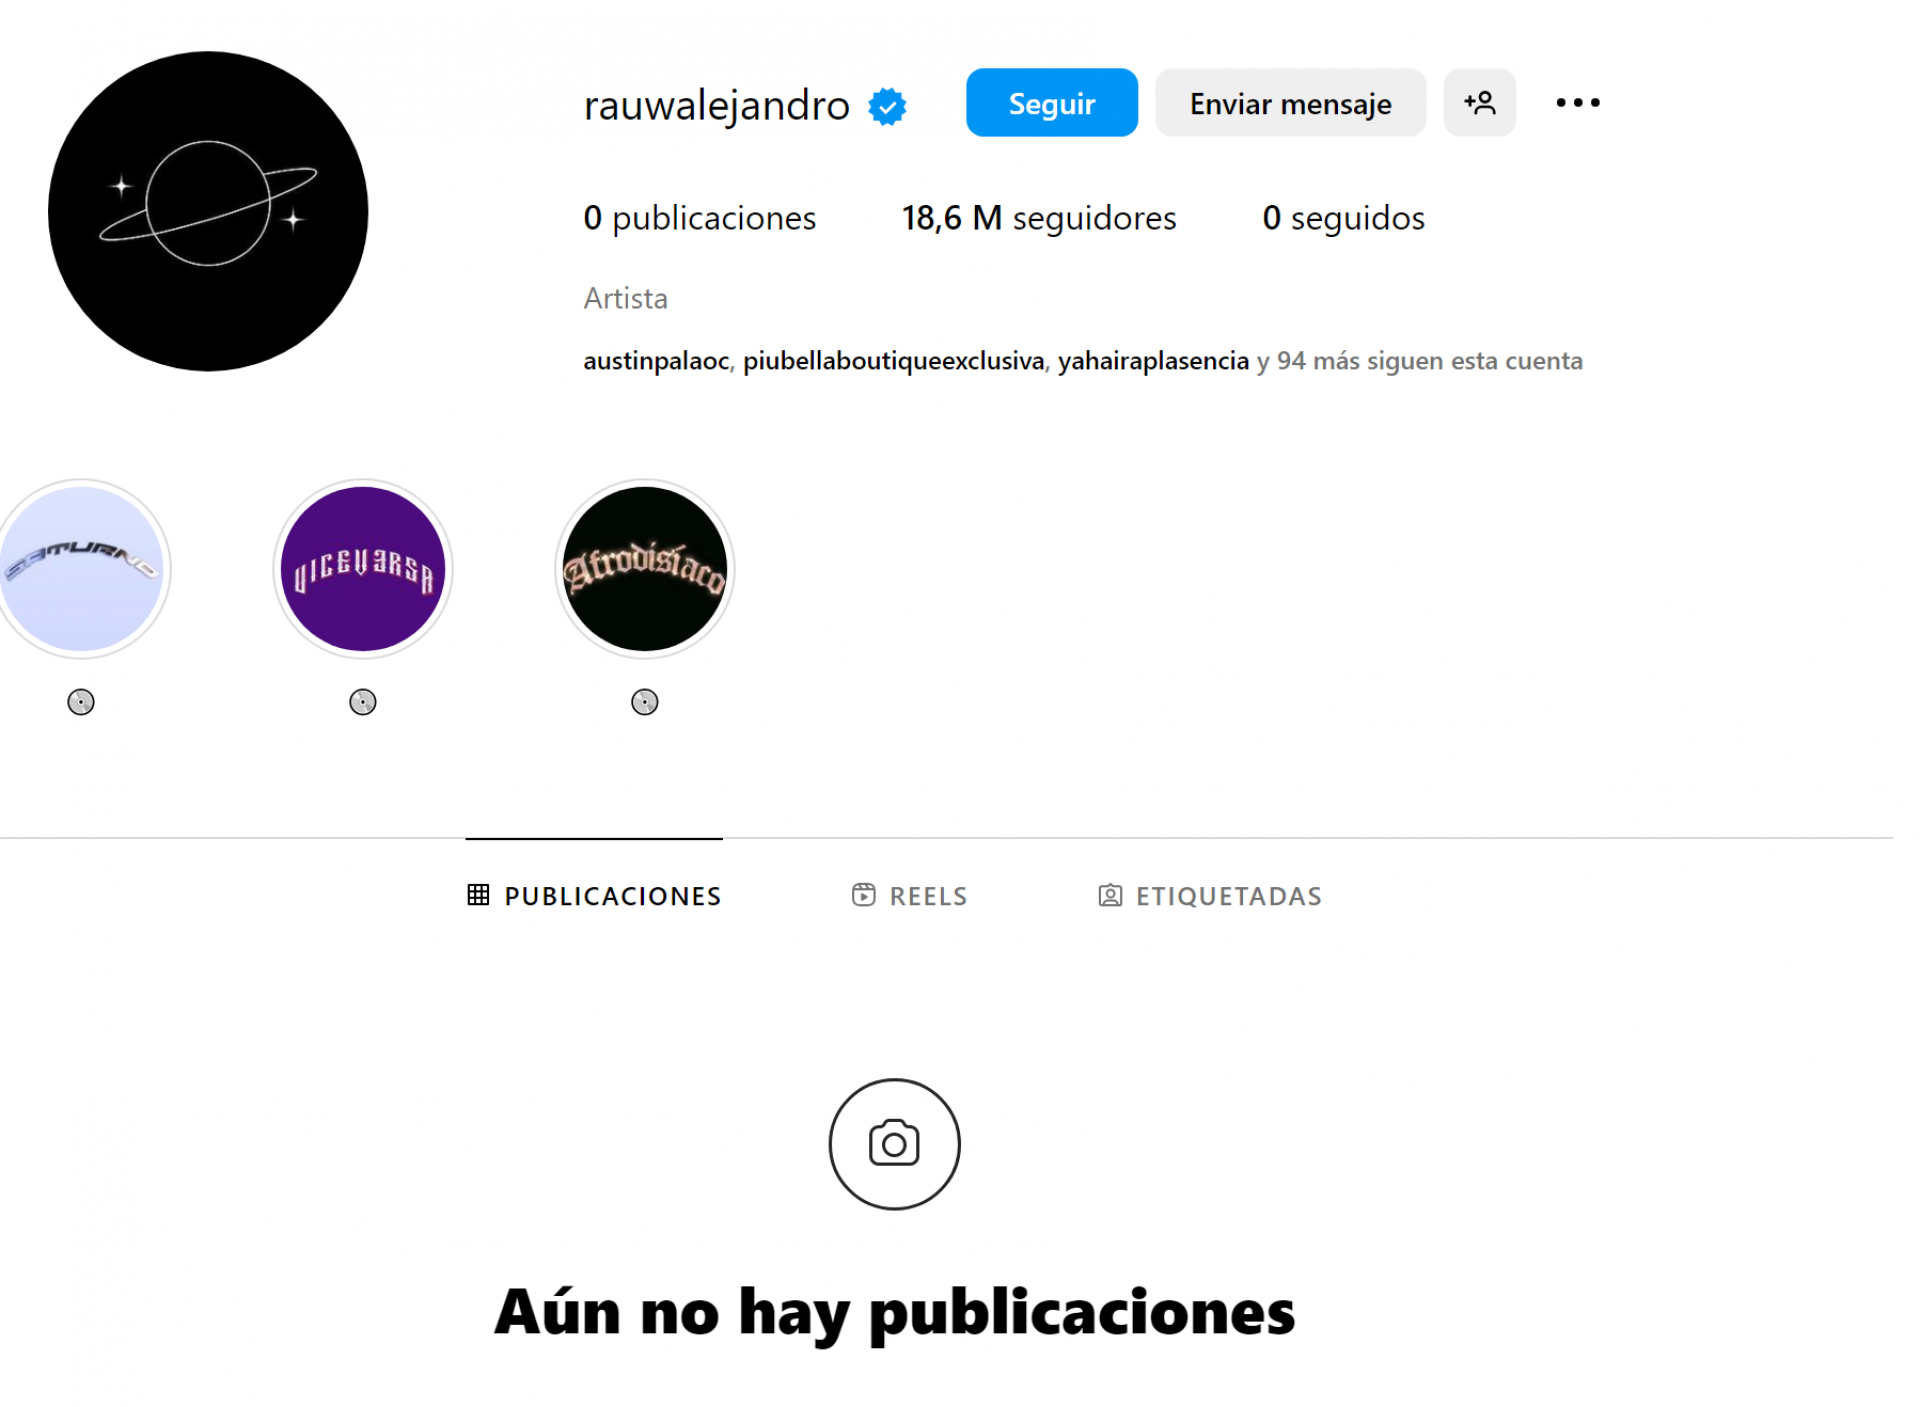 Perfil de Instagram de Rauw Alejandro actualmente.